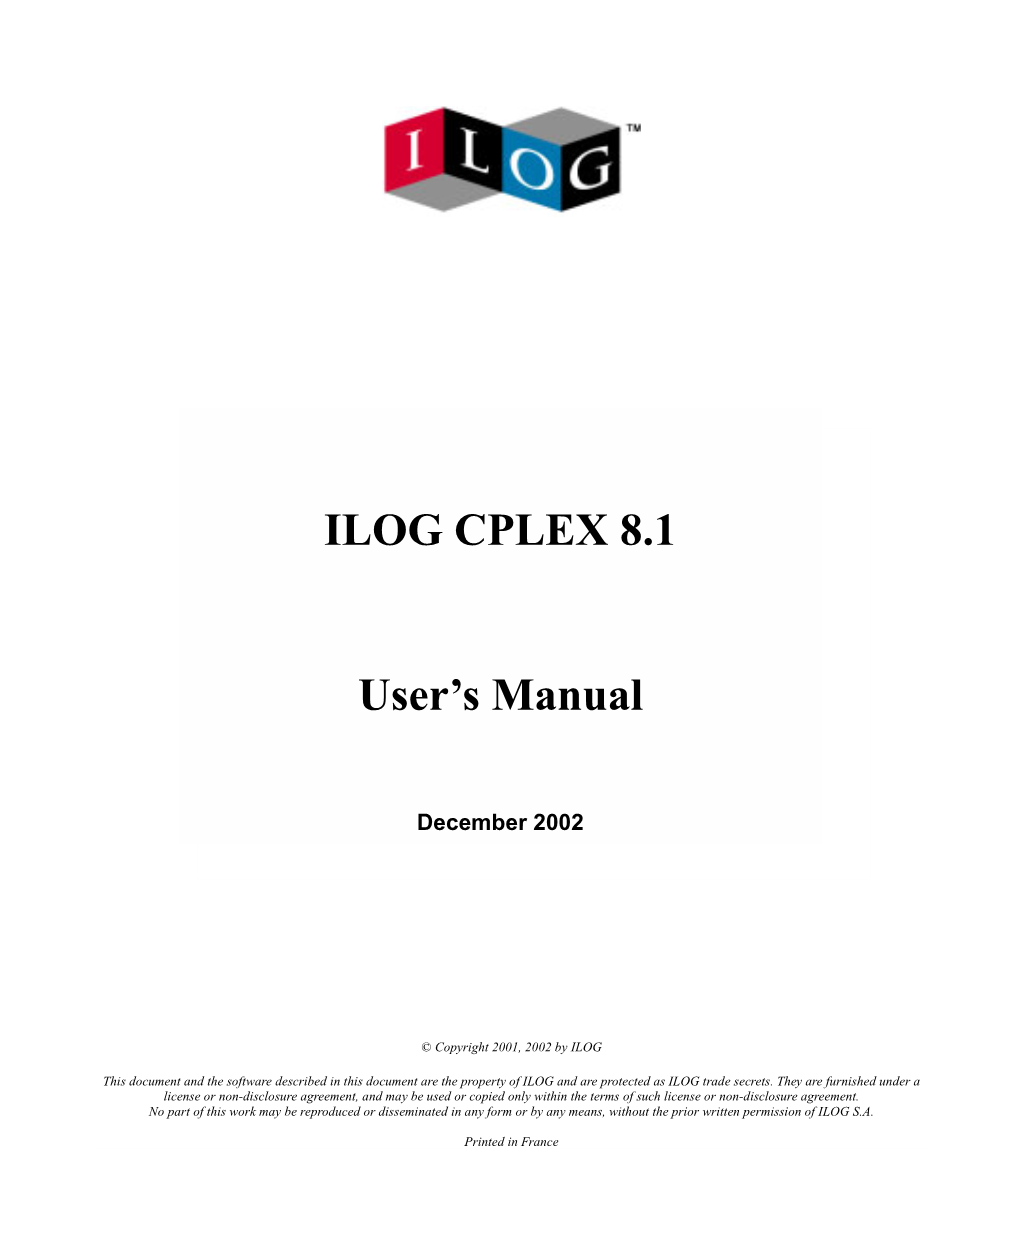 ILOG CPLEX 8.1 User's Manual